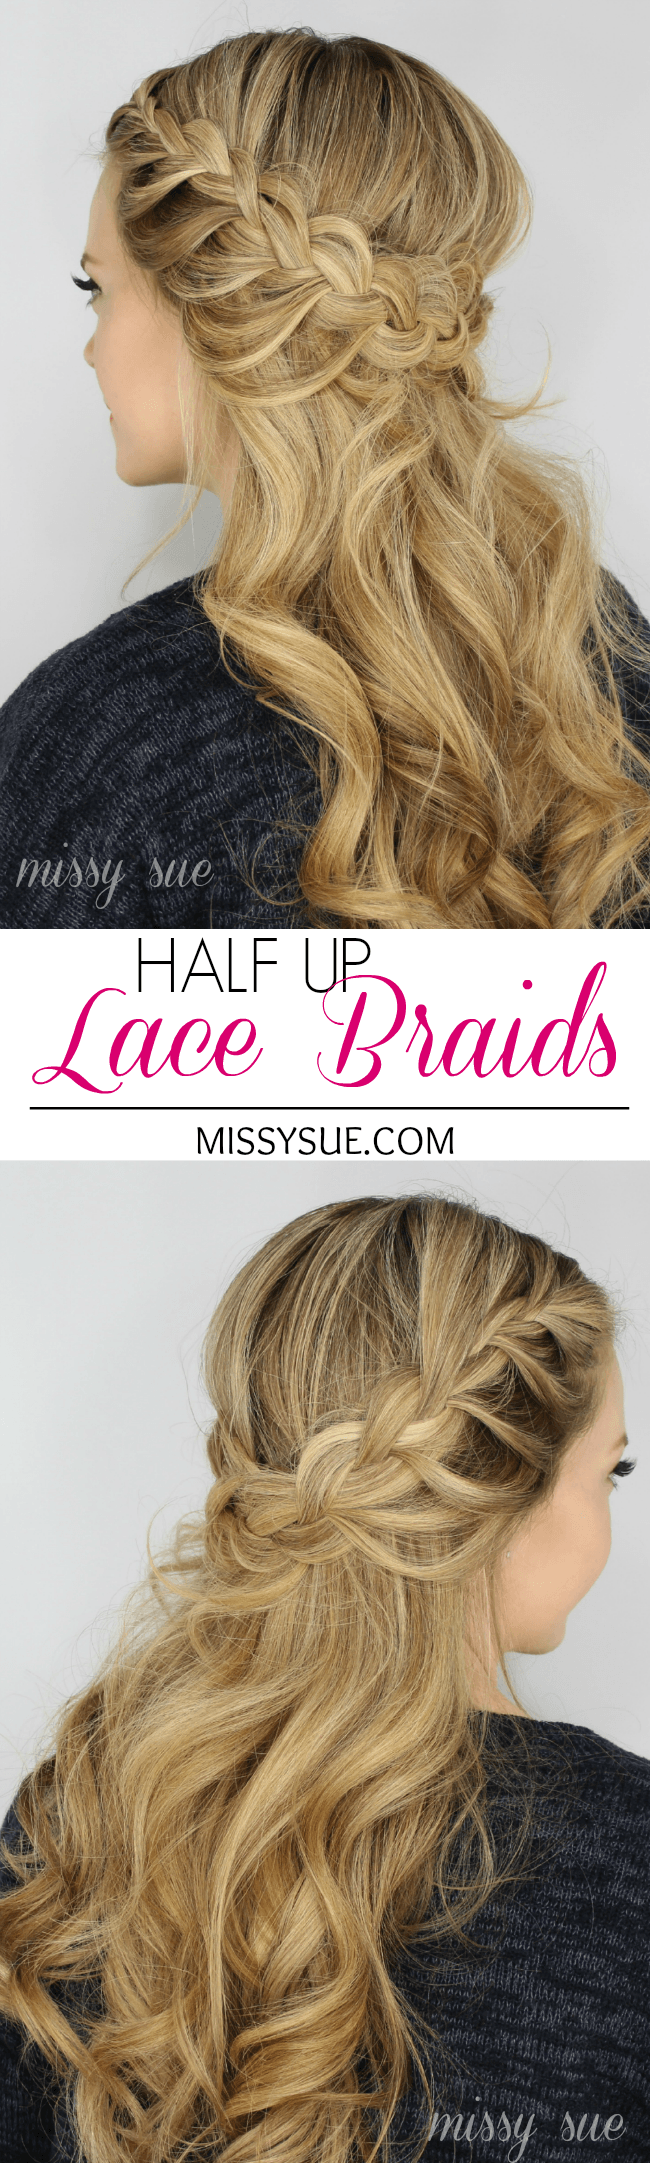 Half Up Lace Braids | Braid 5